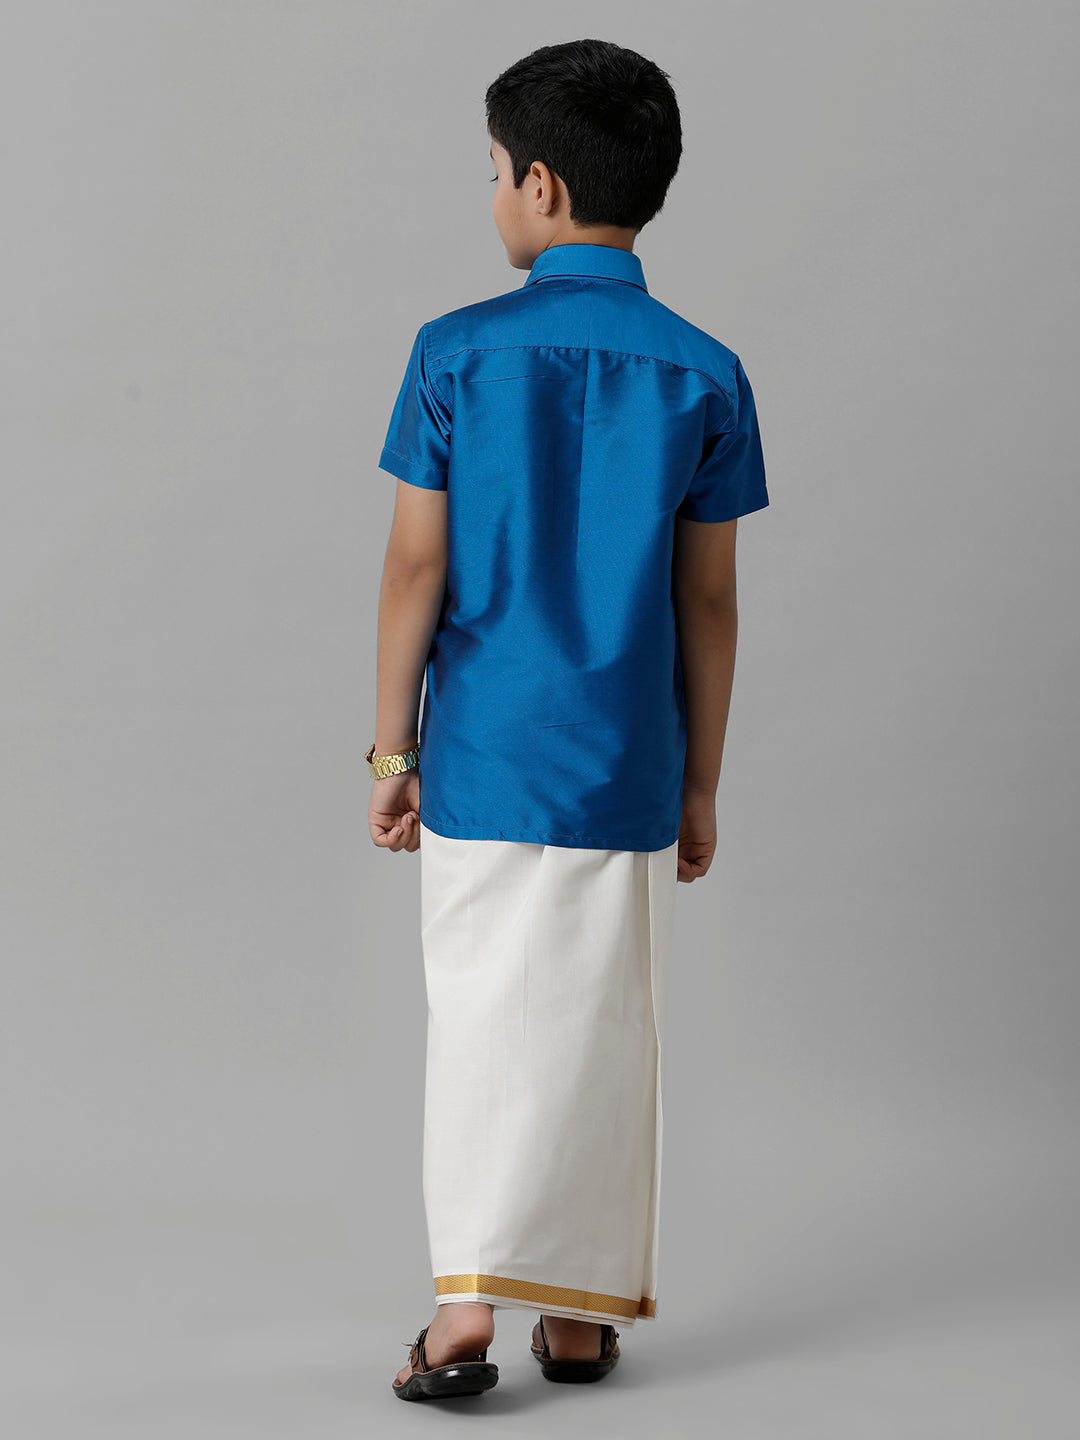 Boys Silk Cotton Shirt with Dhoti Set Royal Blue-Back view